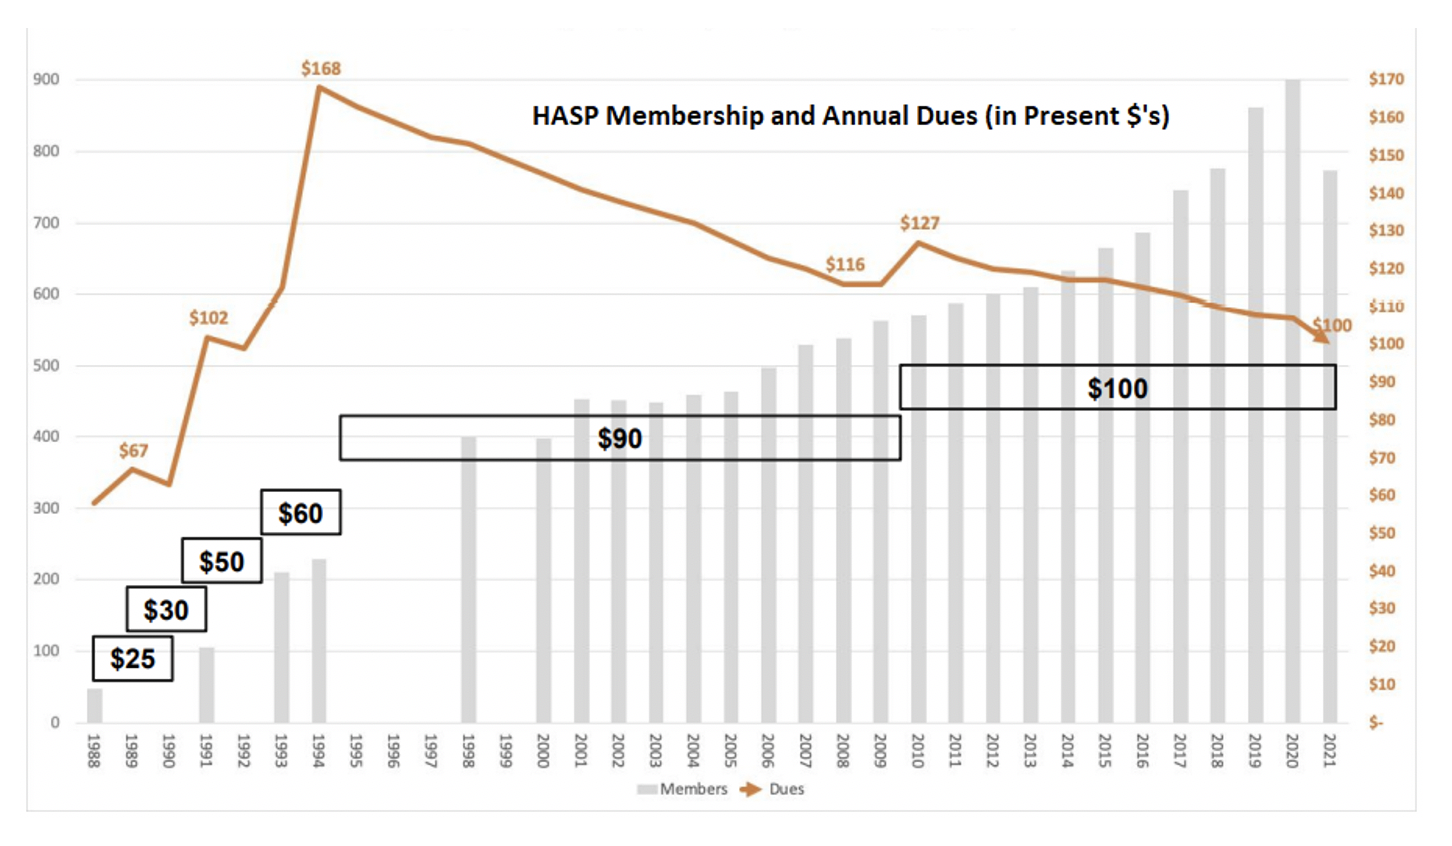 HASP Membership and Annual Dues